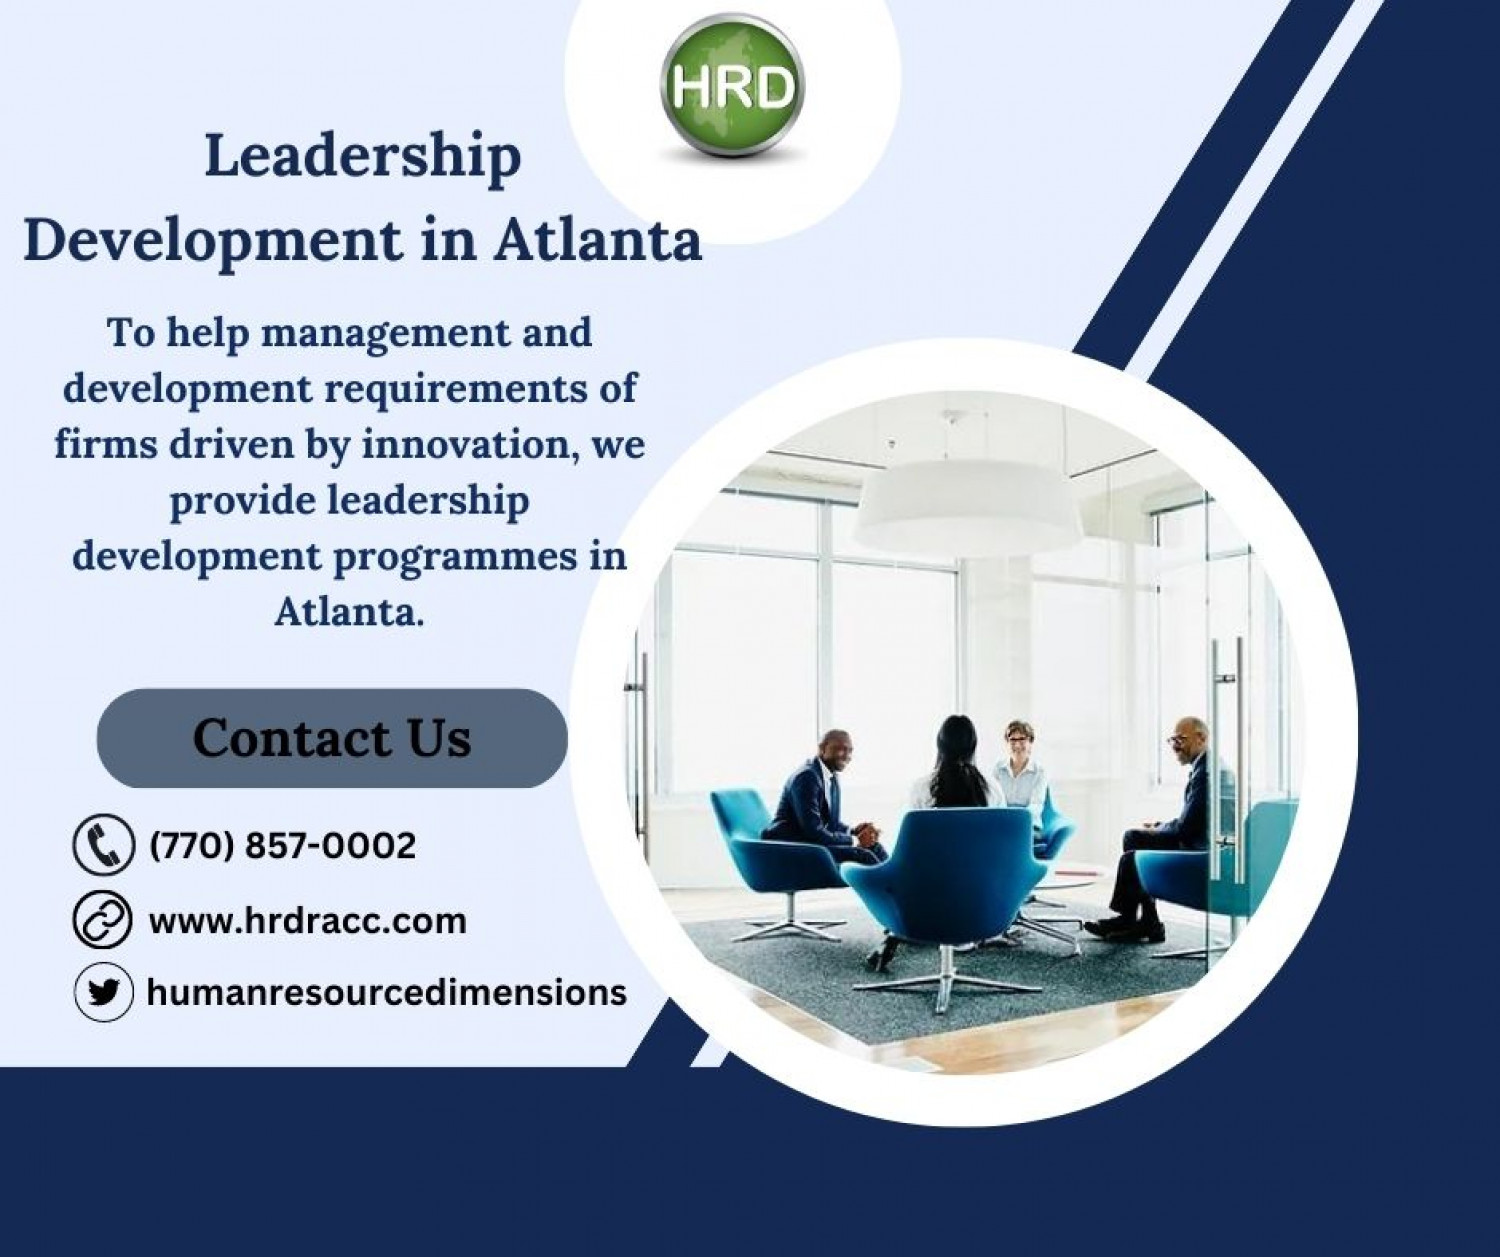 Leadership Development in Atlanta Infographic